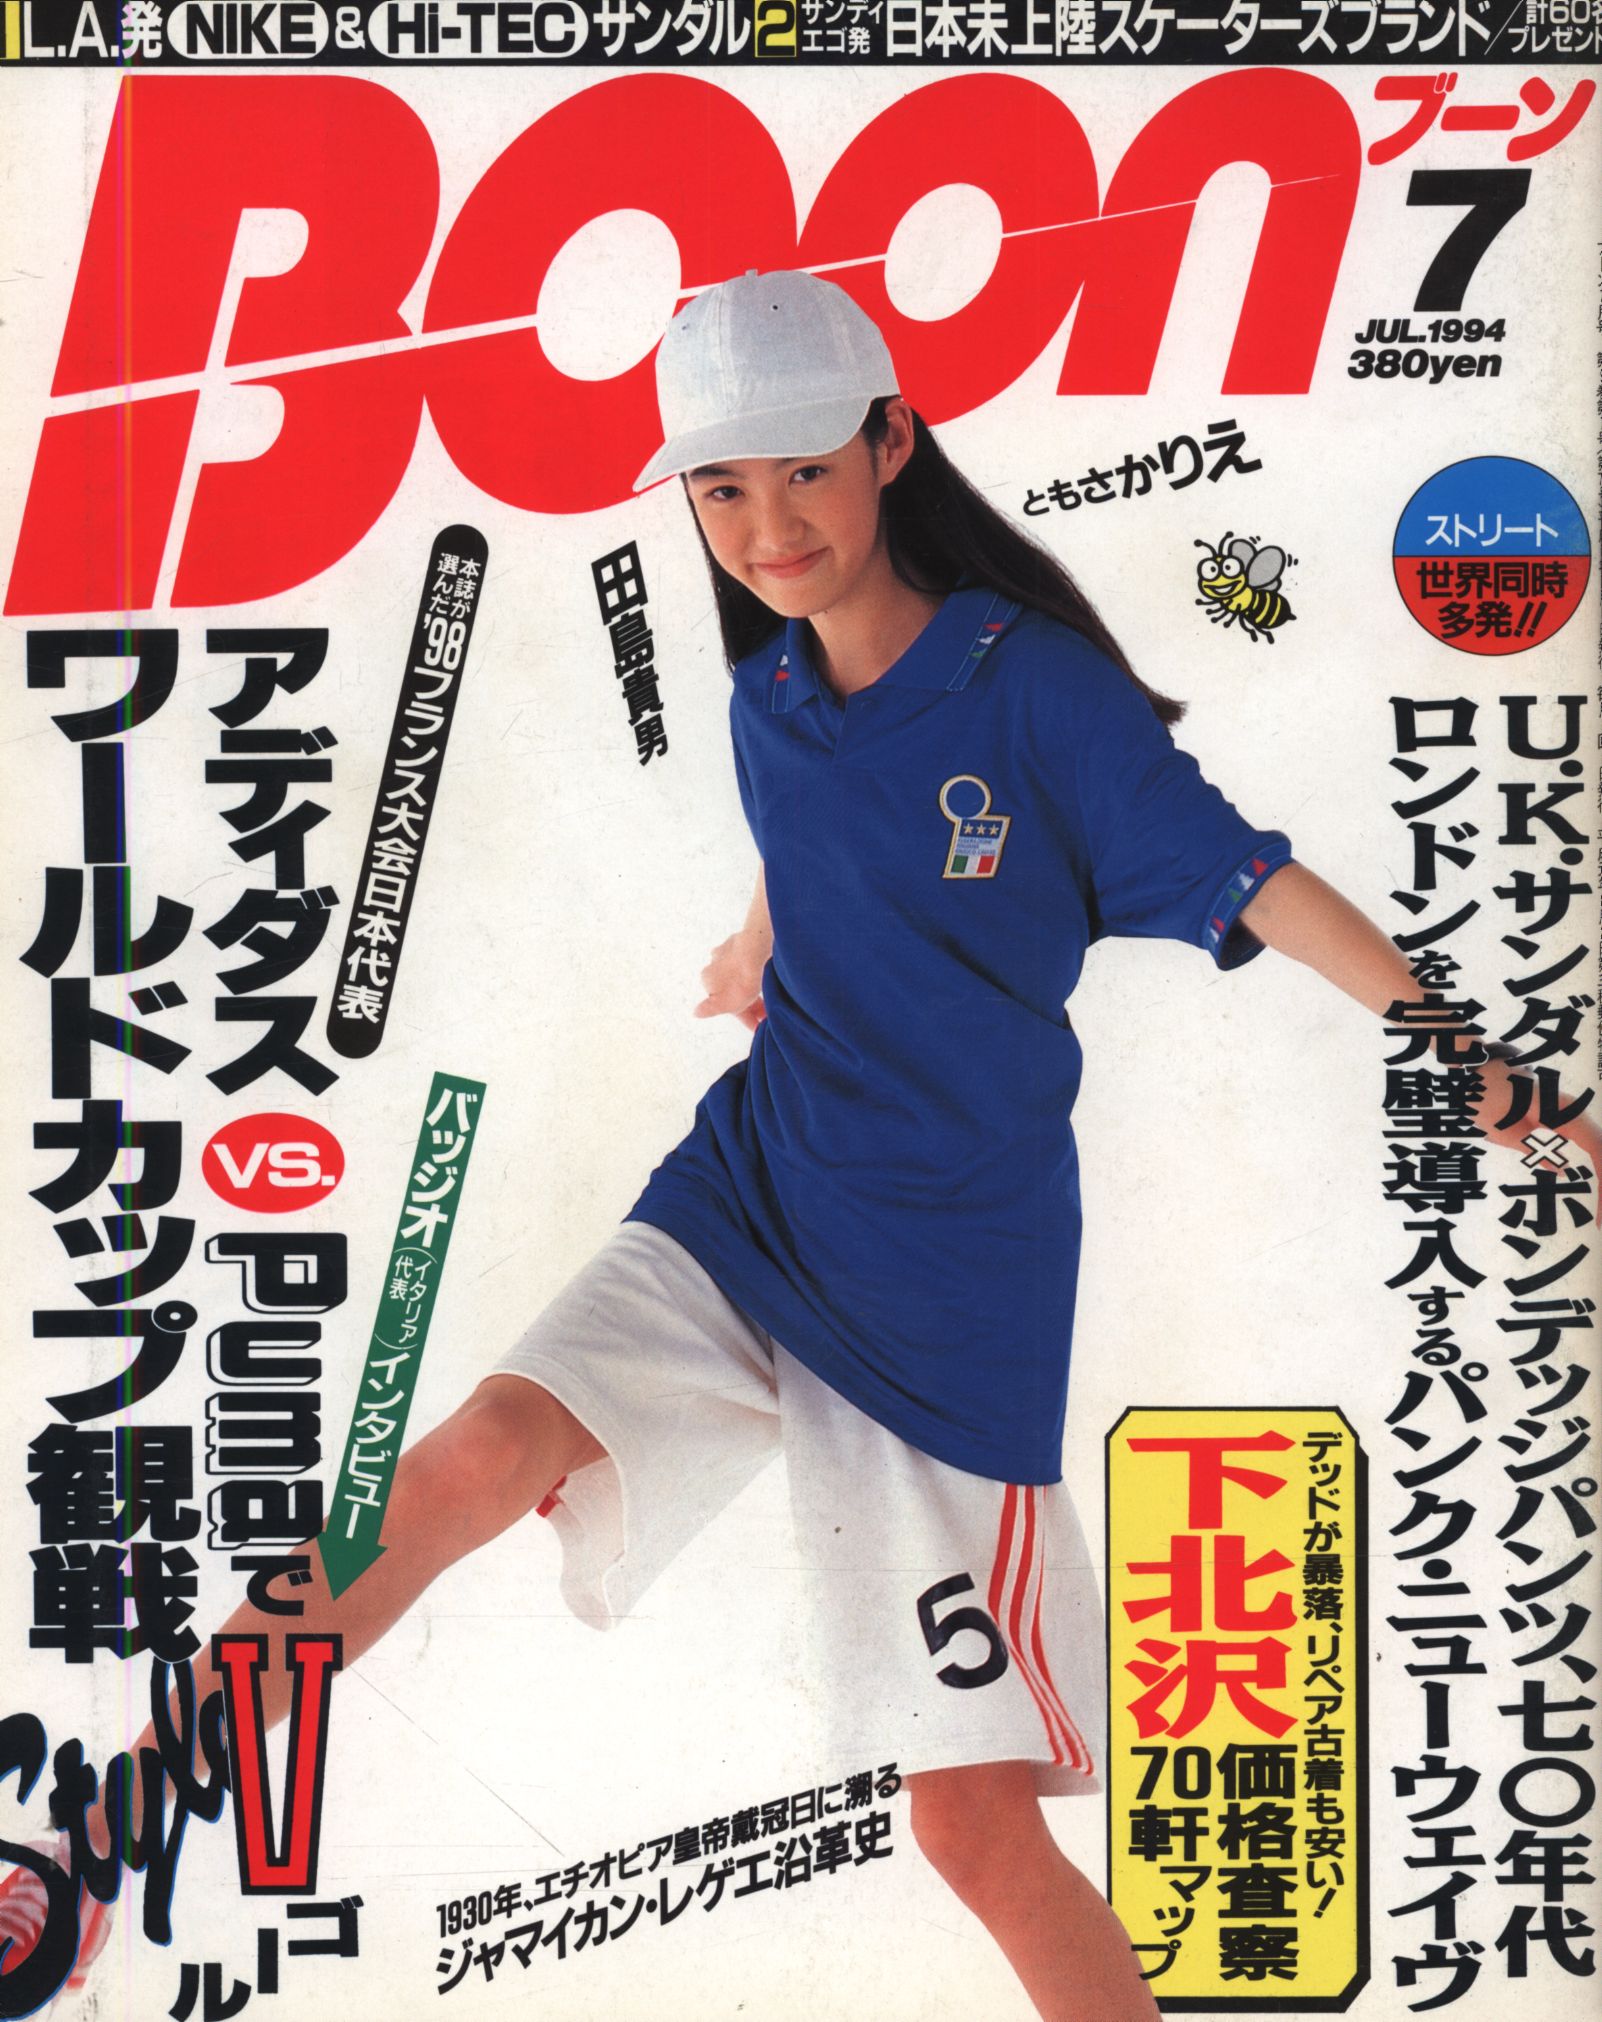 Boon 雑誌 1994年 - ファッション